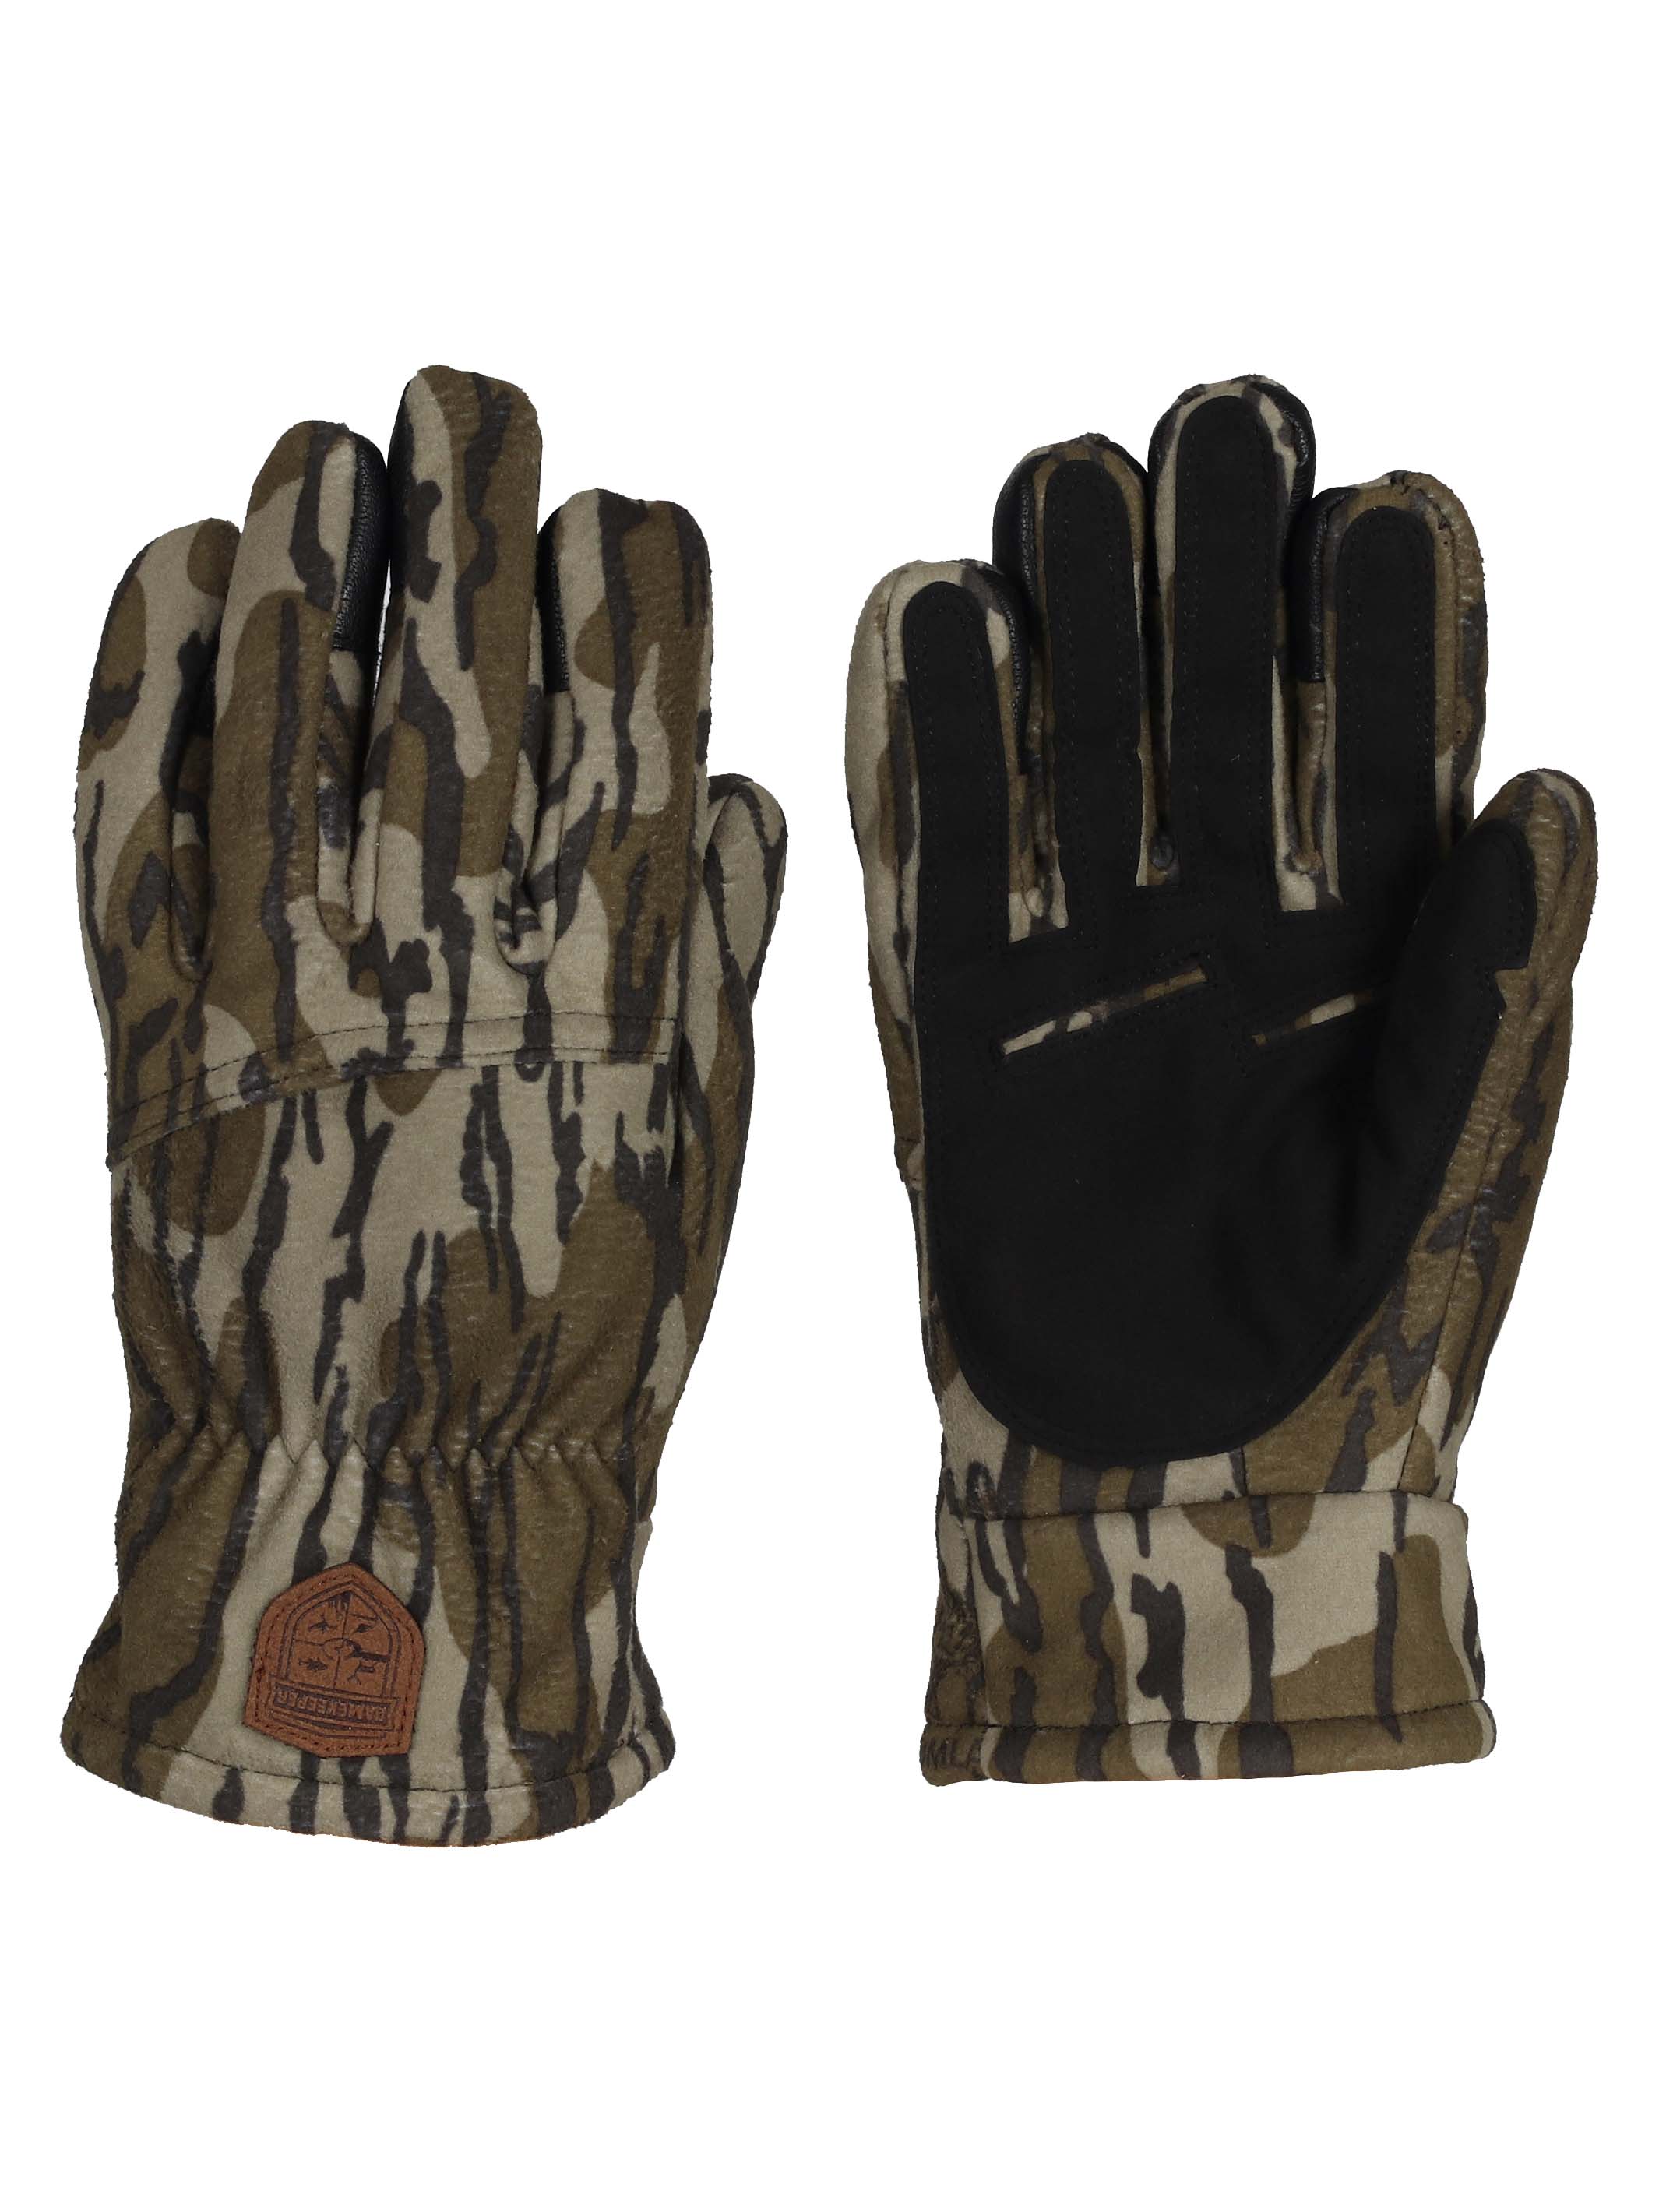 Mossy Oak Gamekeeper Harvester Gloves - 113804BTD - Mossy Oak Original Bottomland Camo